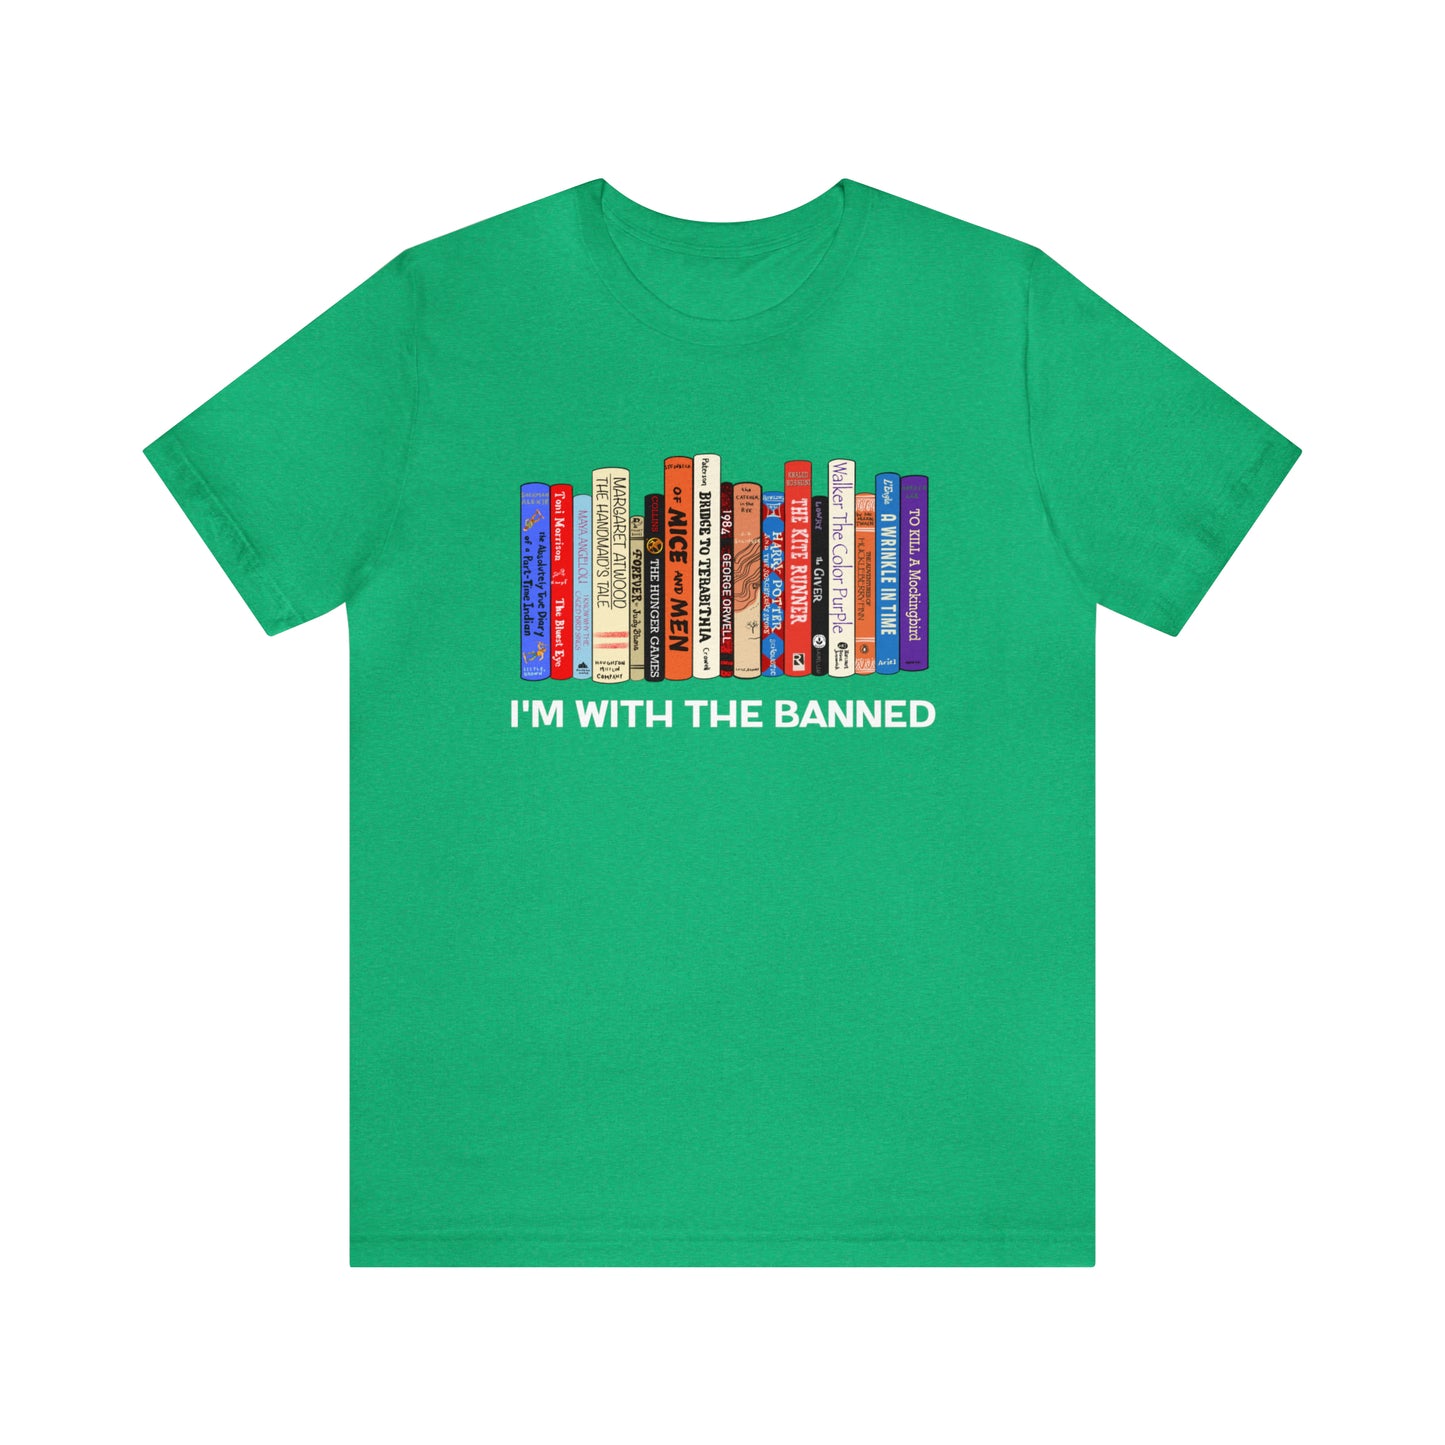 I'm With The Banned | Banned Books Shirt | Librarian Shirt | Teacher Shirt | Unisex Super Soft Premium Graphic T-Shirt